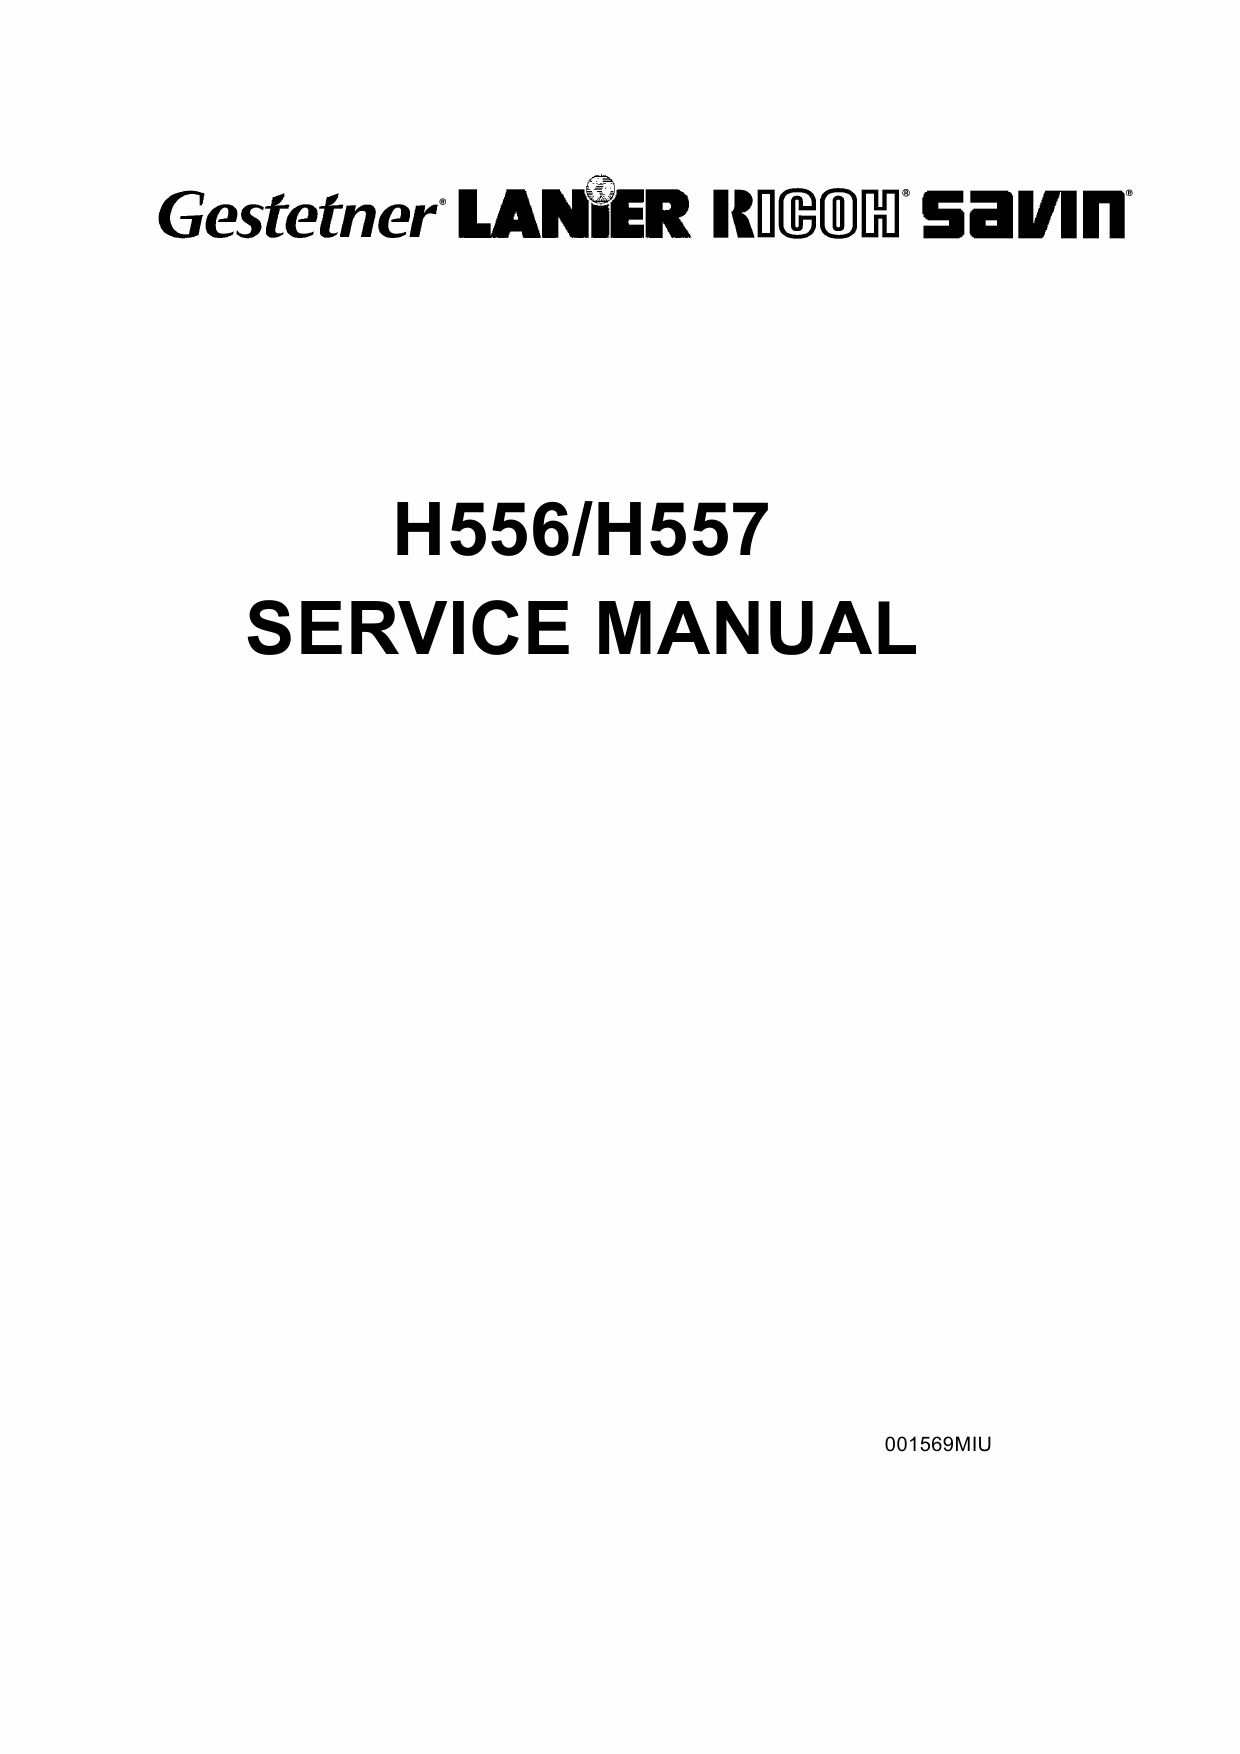 RICOH Fax 4410 4420 4430 H556 H557 Service Manual-2